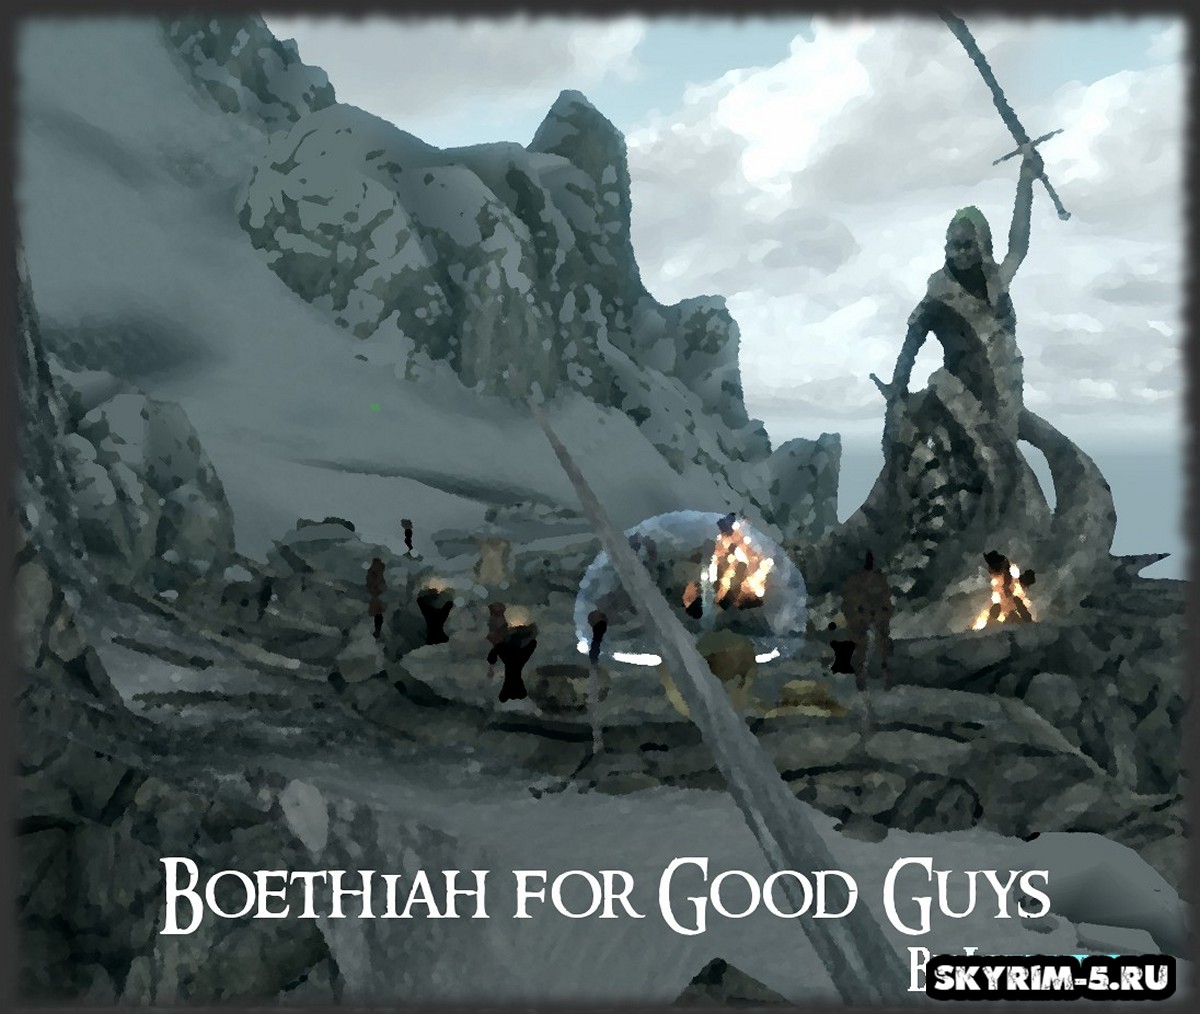 Боэтия для хороших ребят - Boethiah for Good Guys